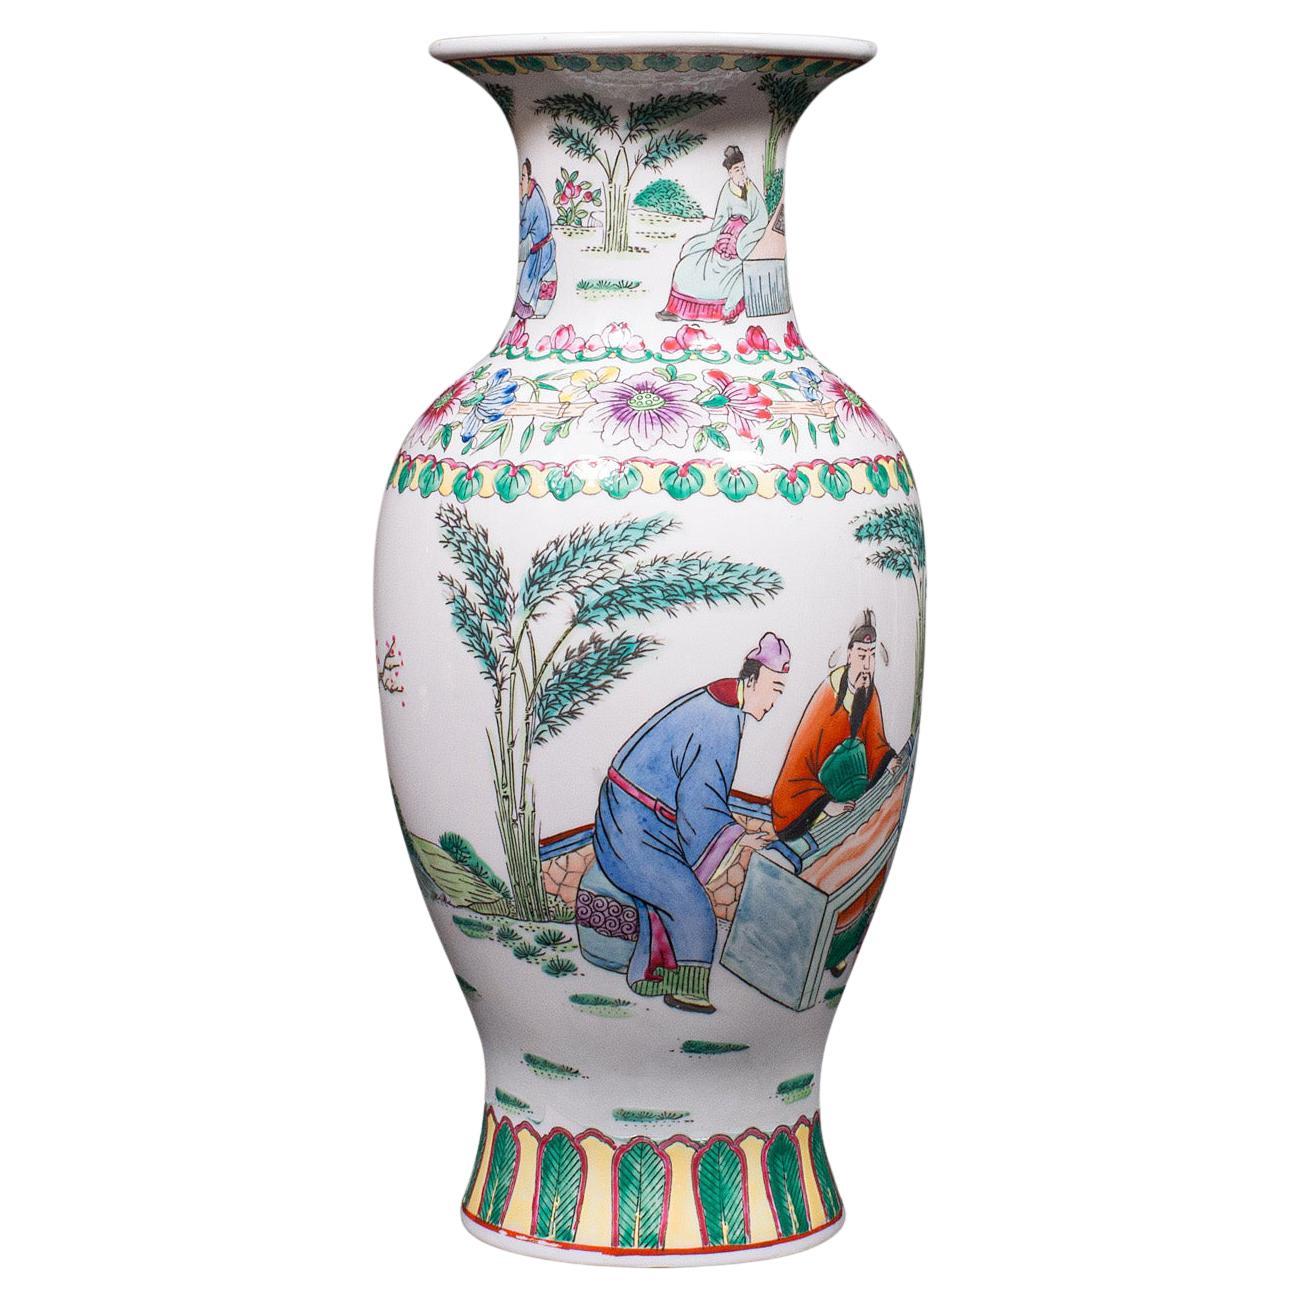 Antike Posy-Vase, chinesisch, Keramik, Baluster, handbemalt, viktorianisch, um 1900